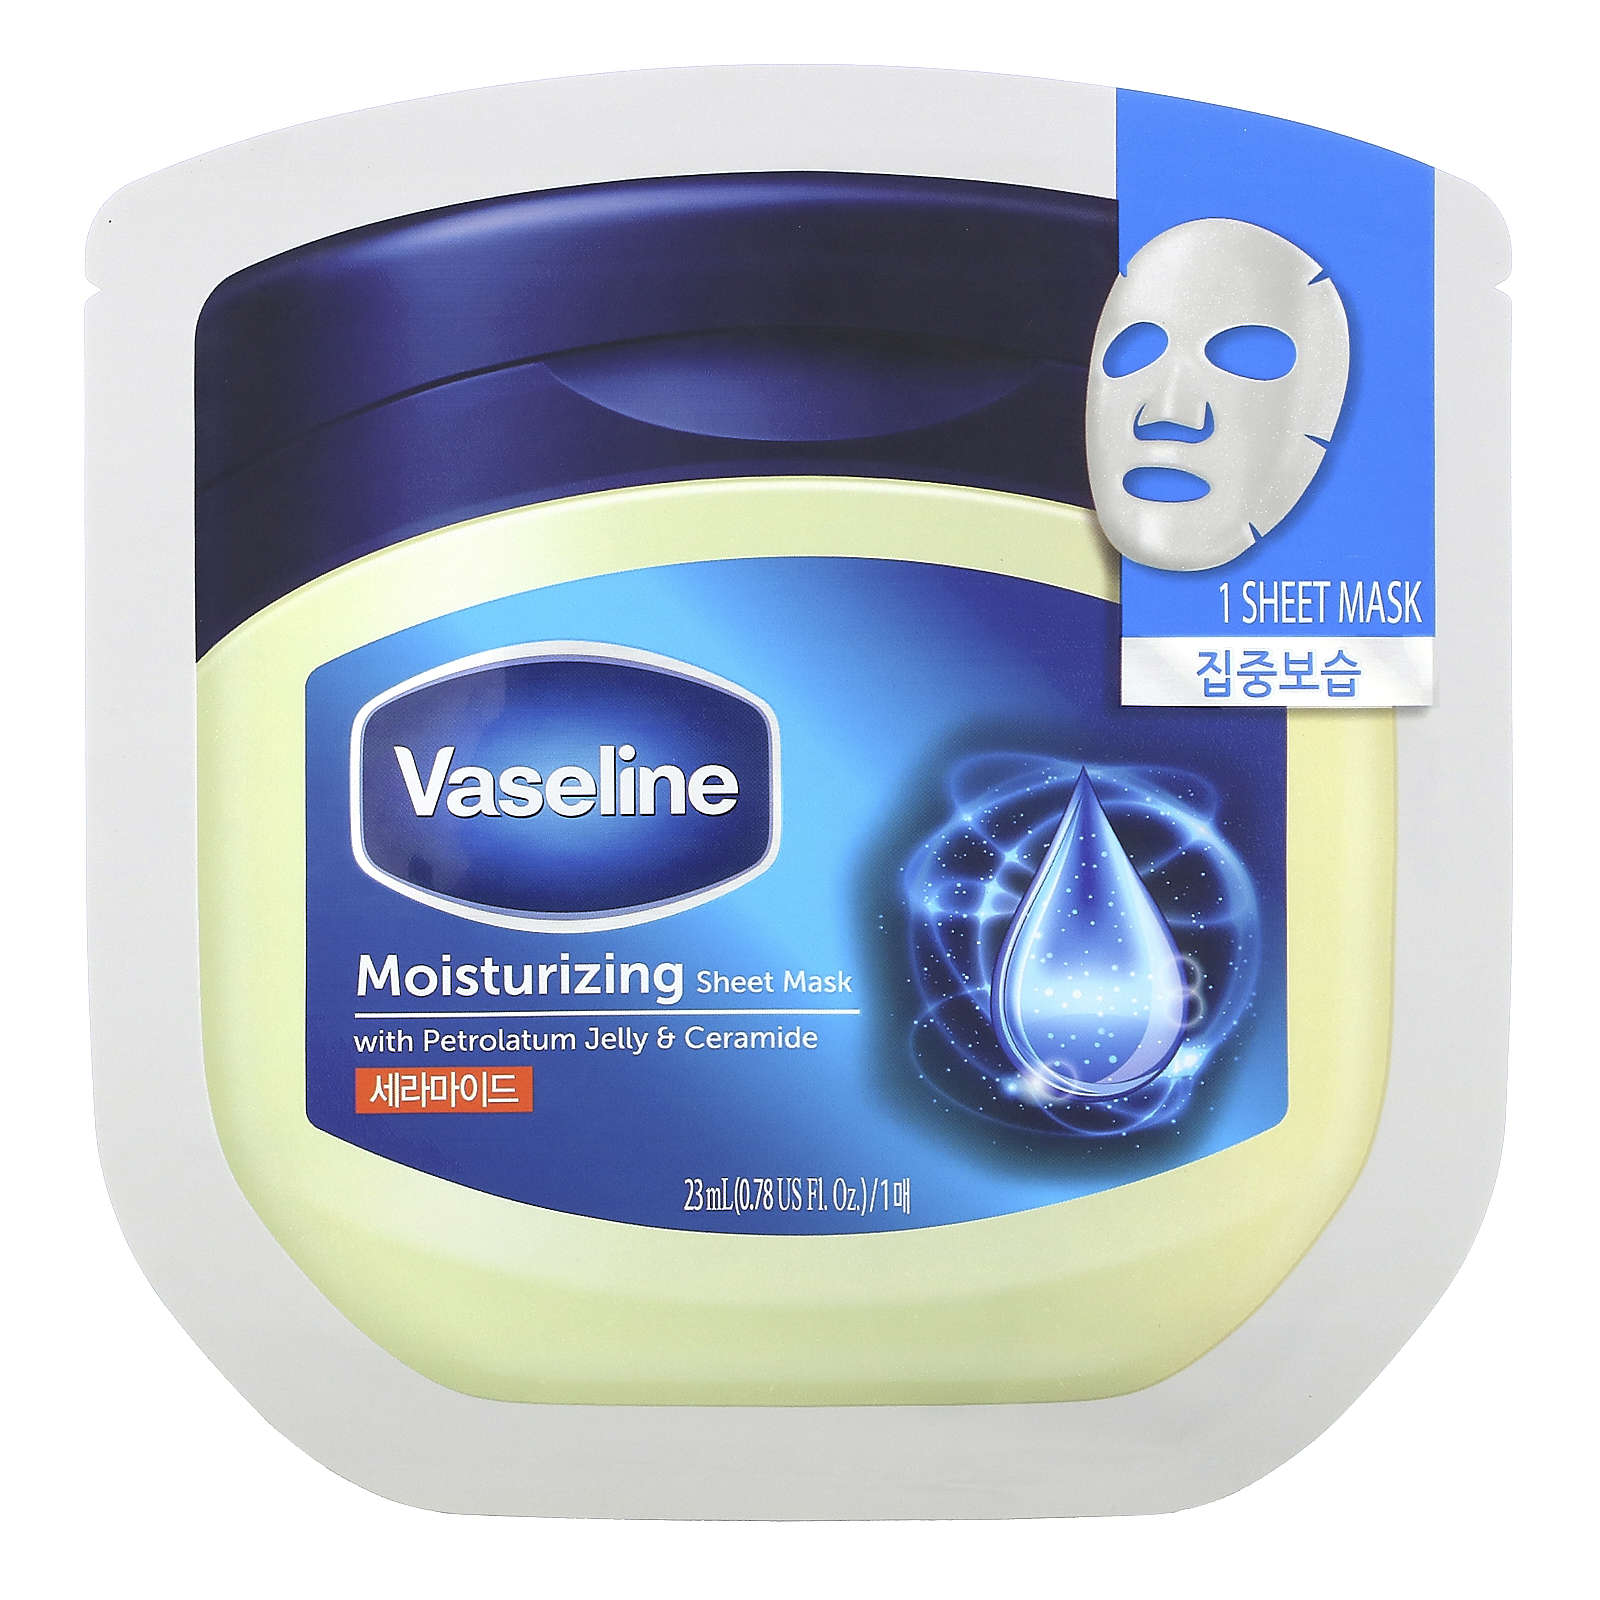 Vaseline 正規 ワセリンゼリー セラミド配合モイスチャライジングシートマスク スピード対応 全国送料無料 1枚 23ml 0.78液量オンス